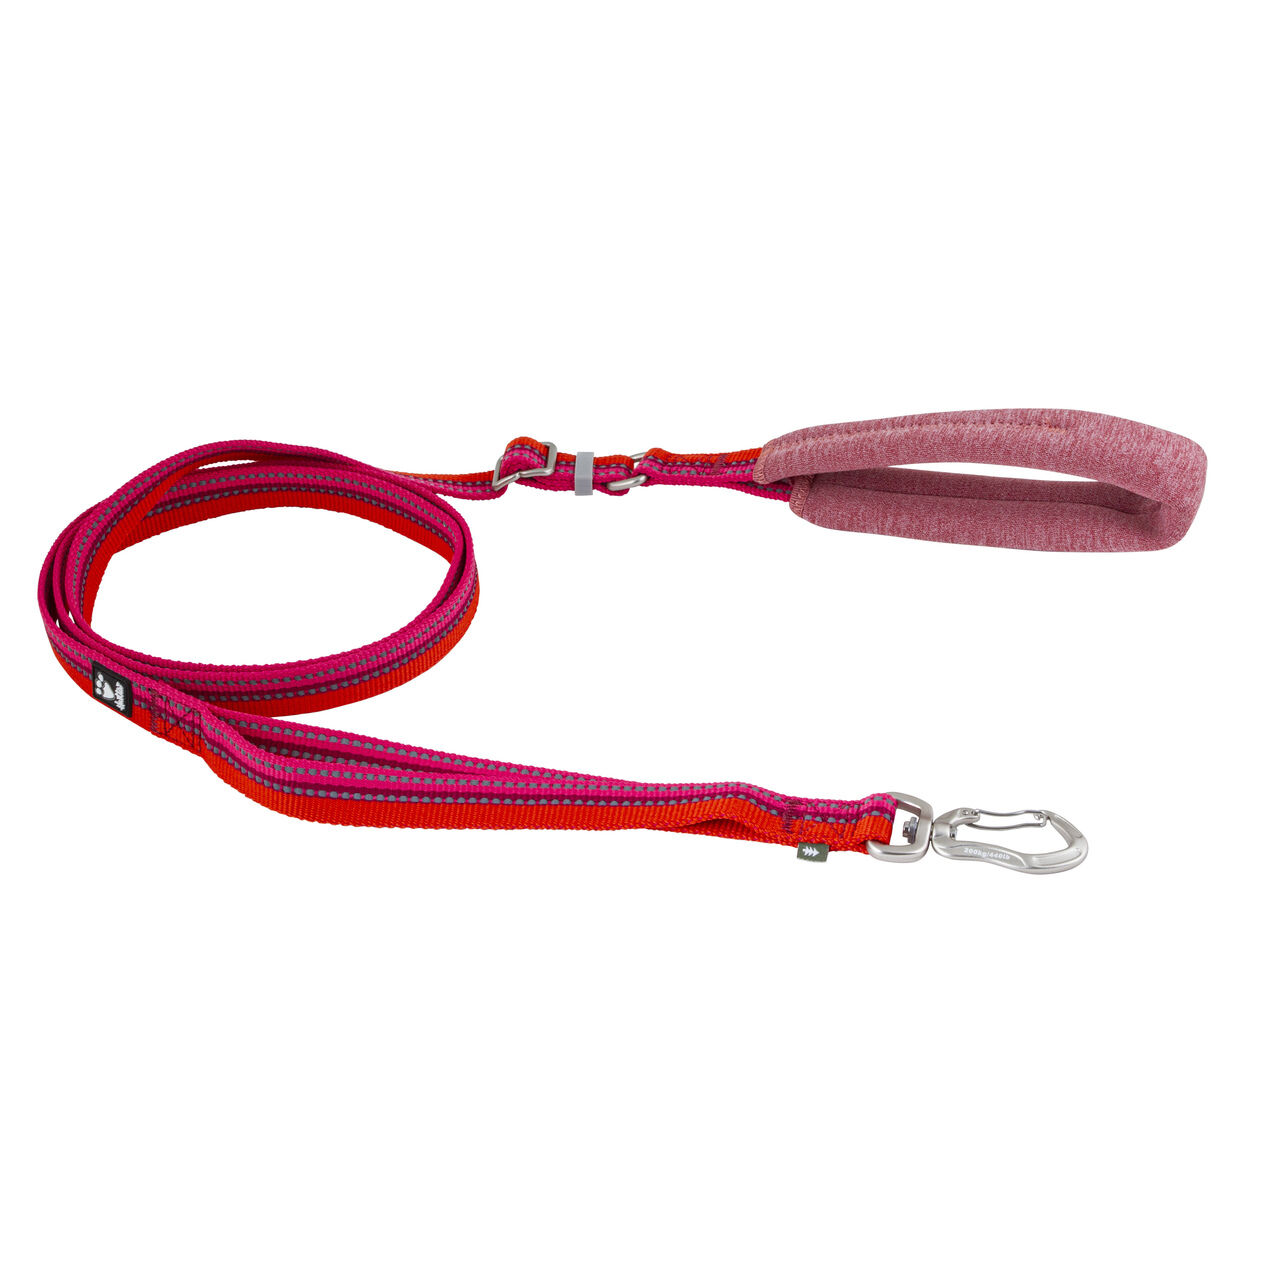 HURTTA-Adjustable-Leash-Eco-verstellbare-Hundeleine-rosehip-hagebutte-pink-orange-gepolsterte-Handschlaufe-HU-934178